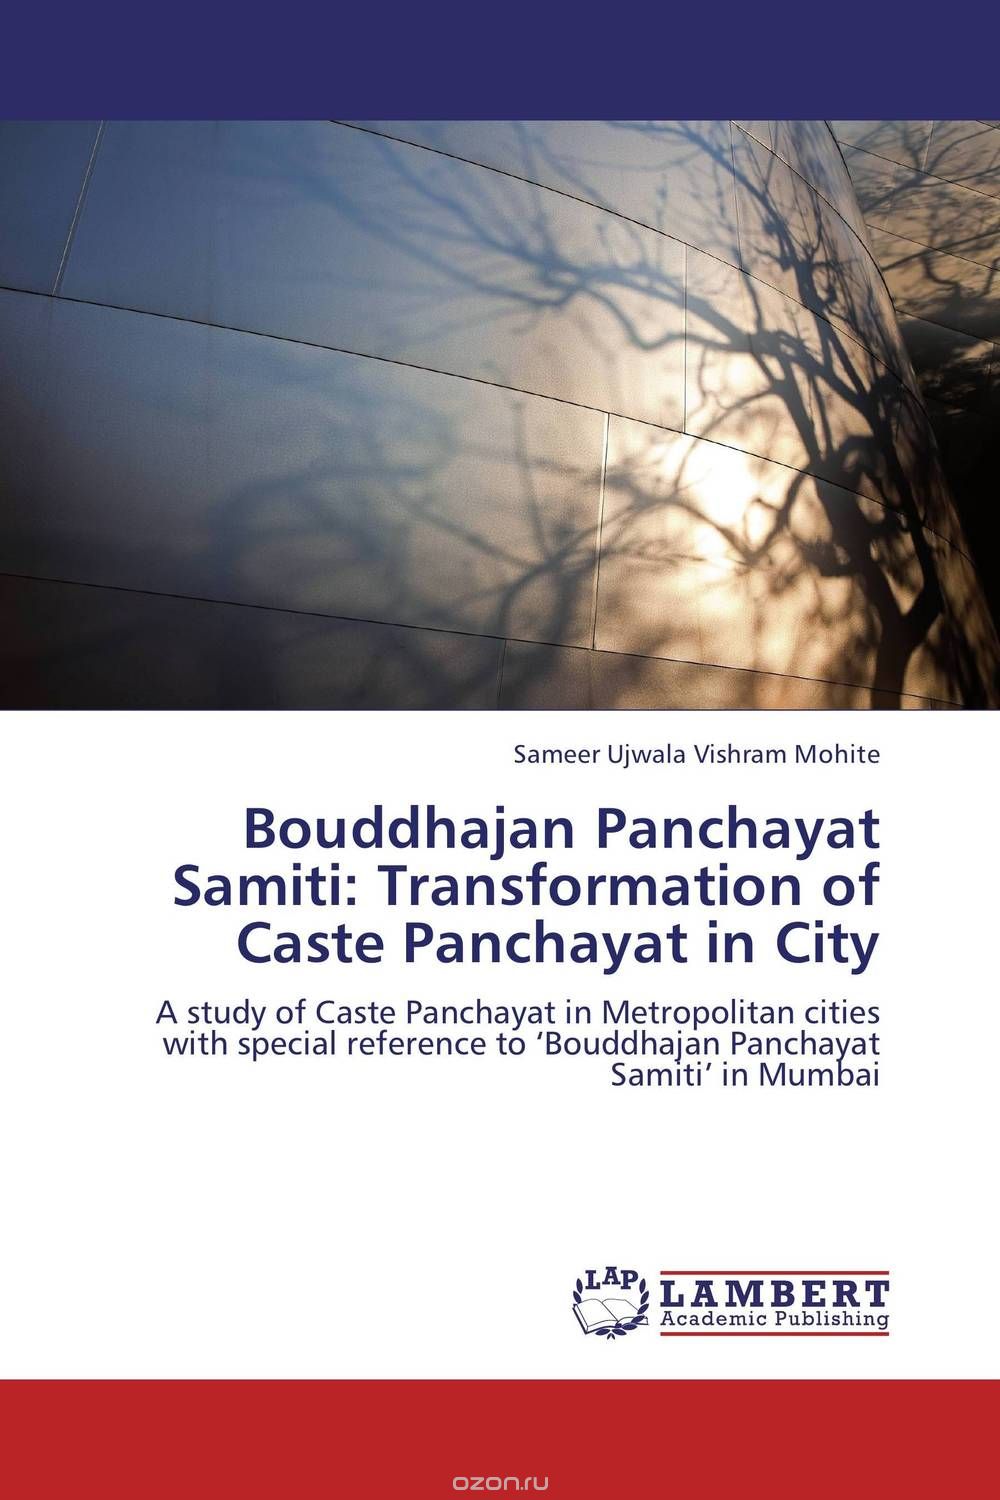 Скачать книгу "Bouddhajan Panchayat Samiti: Transformation of Caste Panchayat in City"